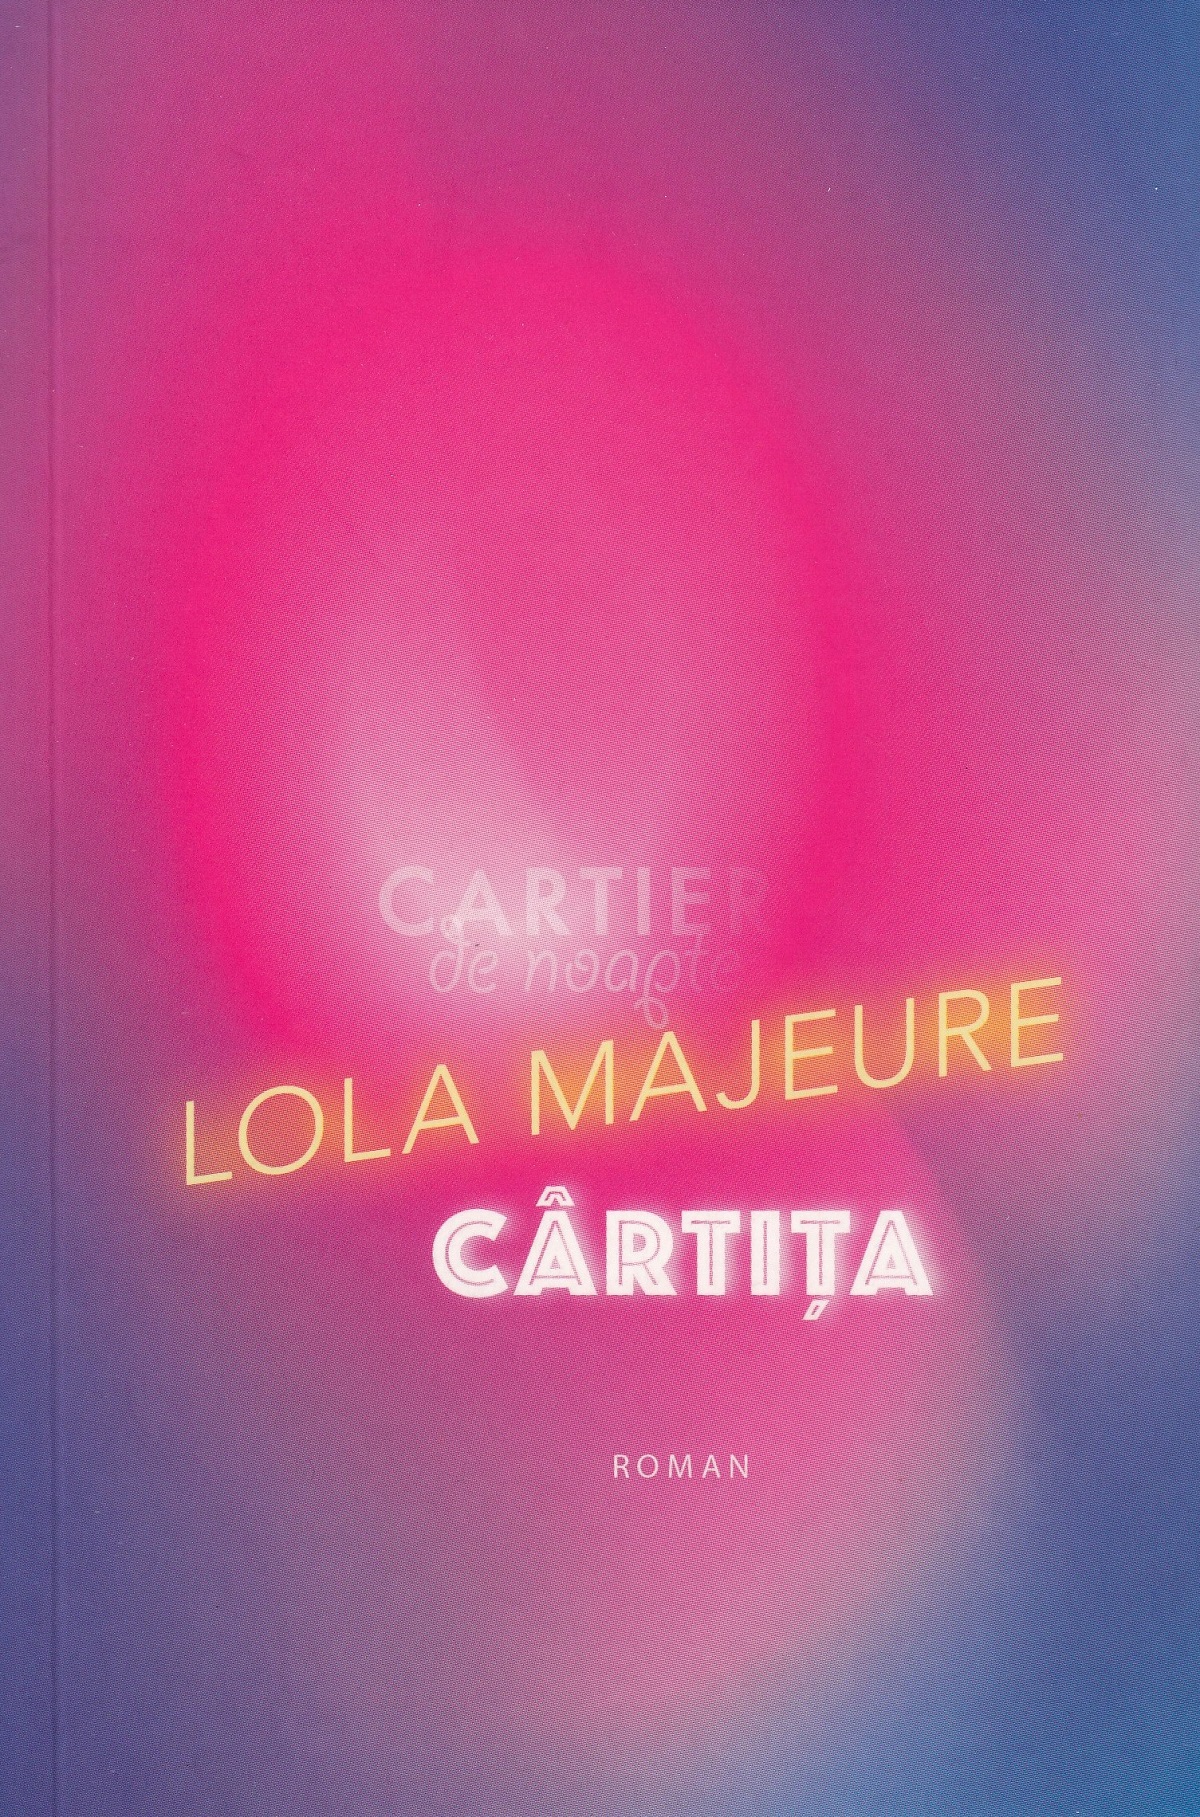 Cartita - Lola Majeure